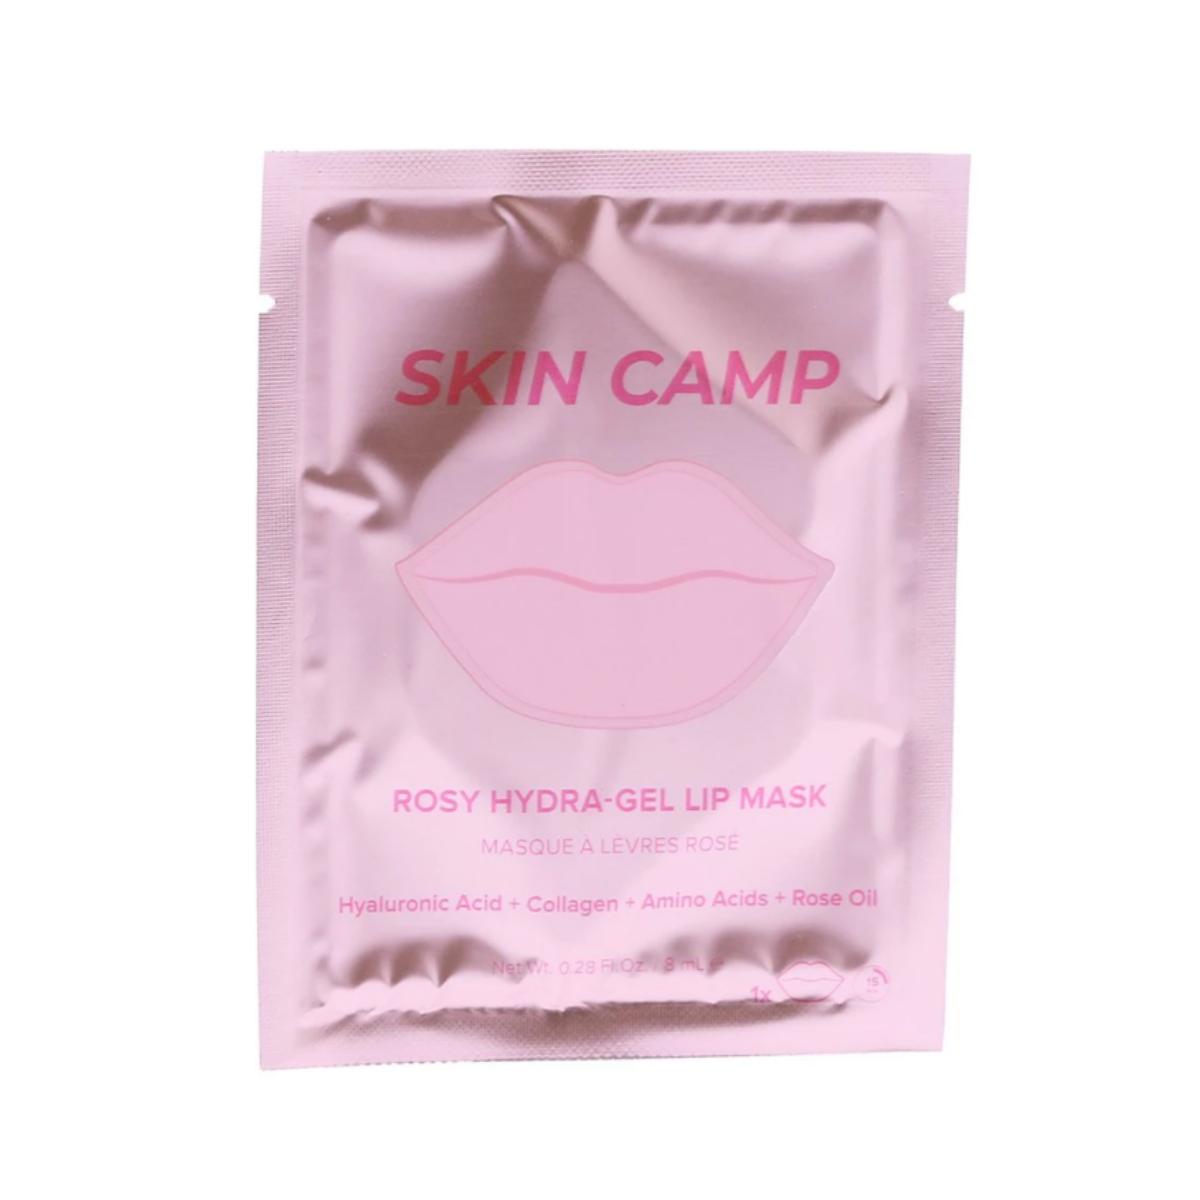 Primary image of Skin Camp Hyrda Gel Lip Mask